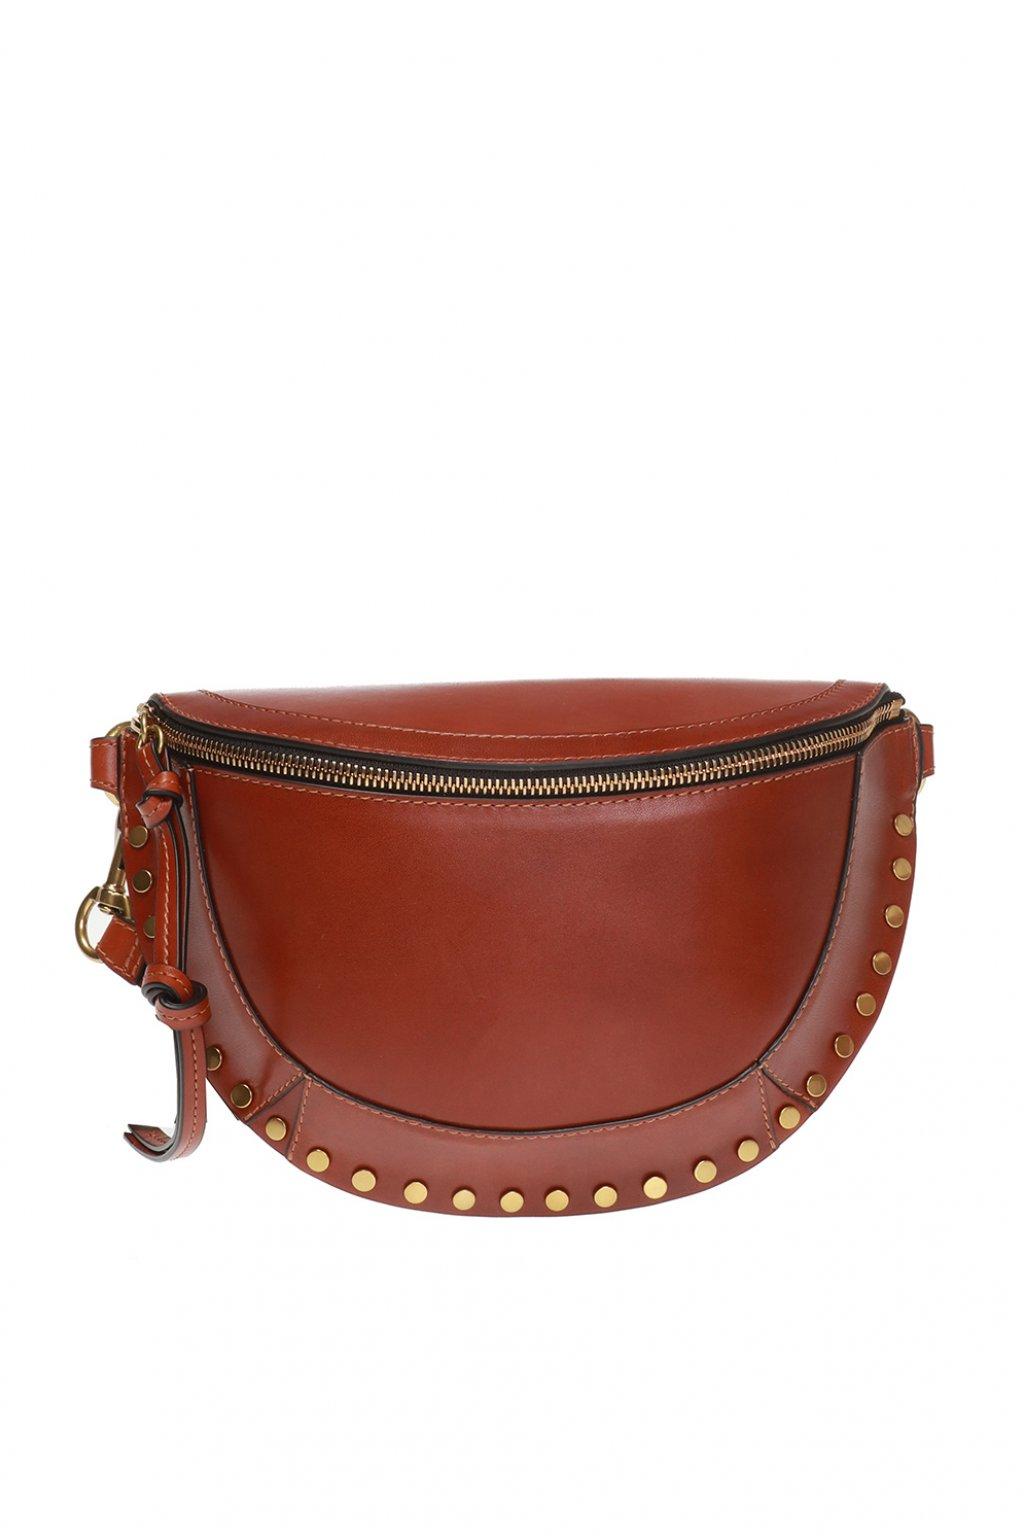 Isabel Marant Leather Skano Belt Bag in Brown - Save 26% - Lyst